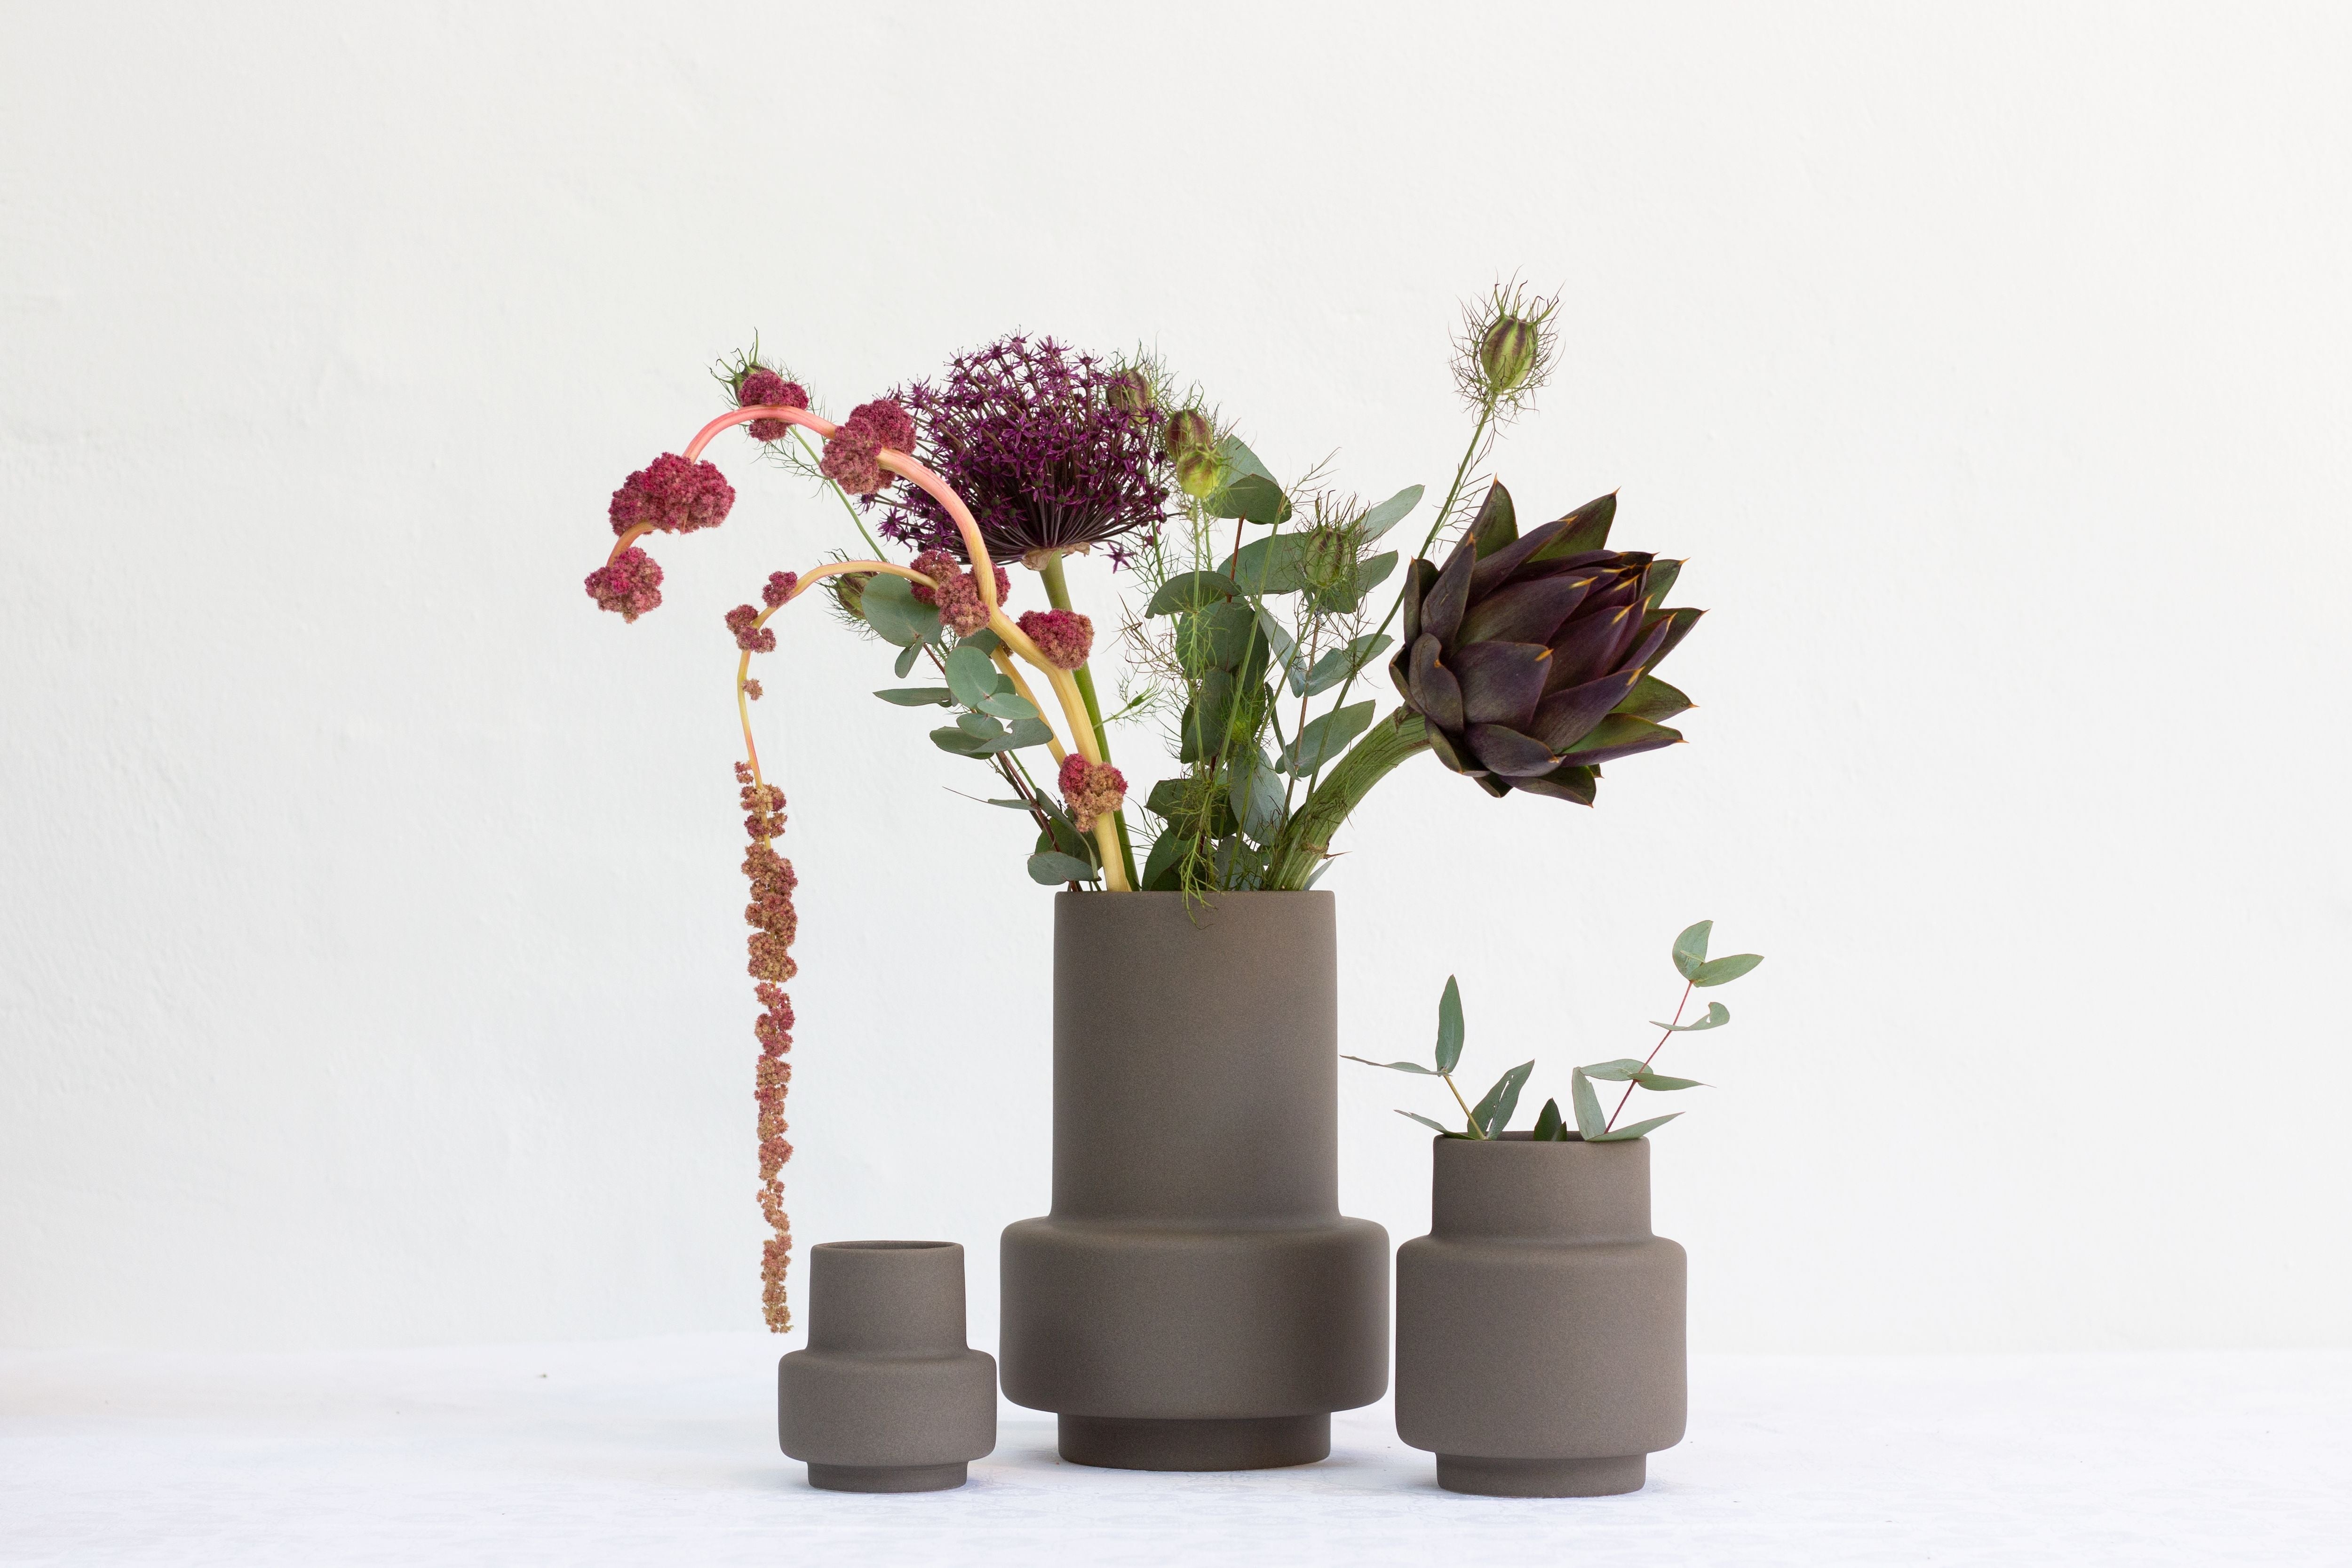 Ro Collection Vase en céramique d'ouragan Medium, pierre sombre